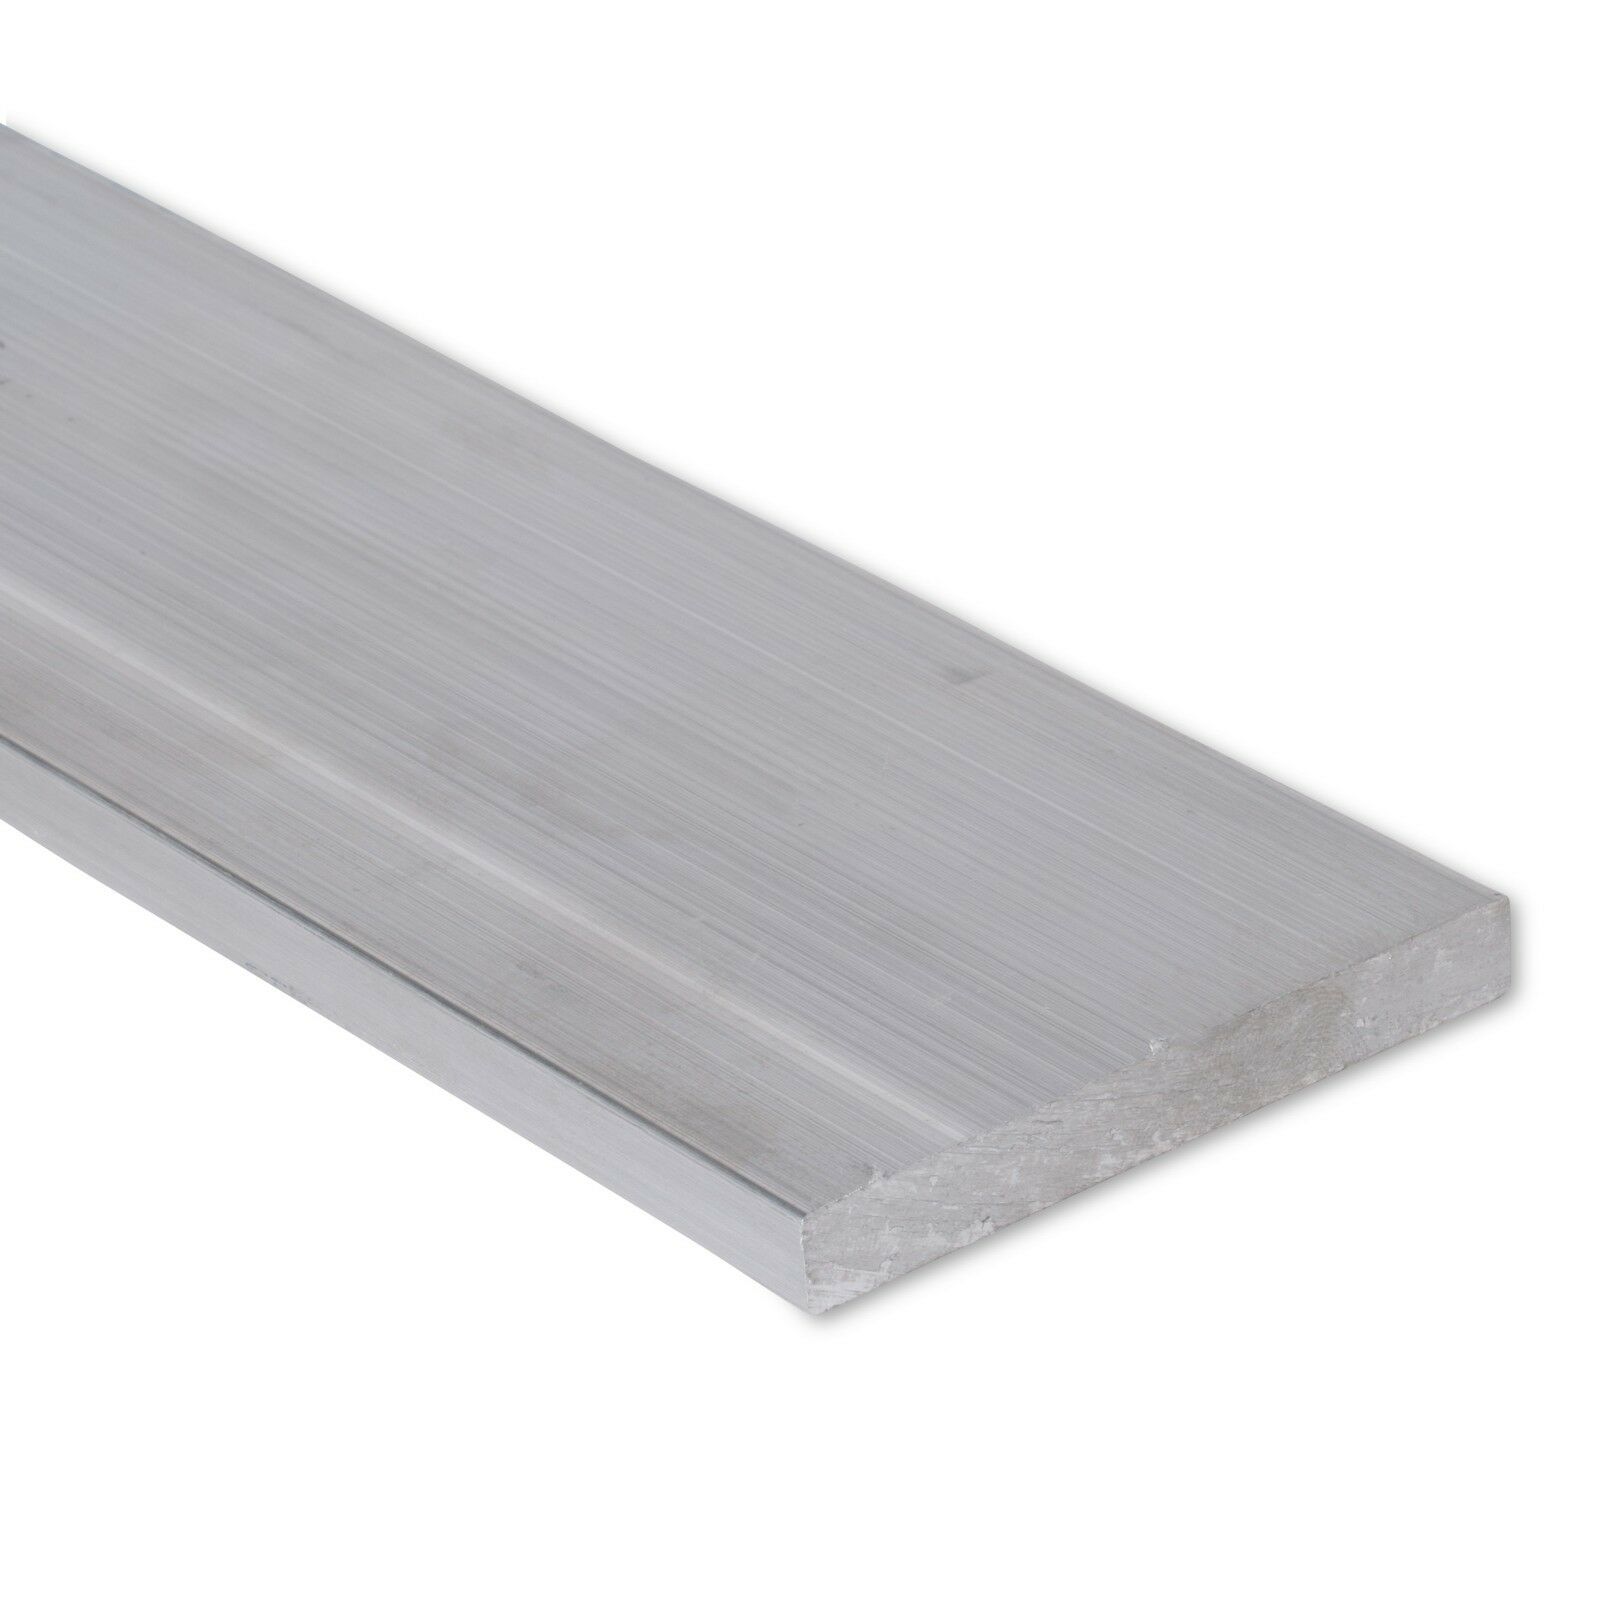 4" length 3/4" x 4'' Aluminum 6061 Flat Bar Mill Stock Sheet Plate